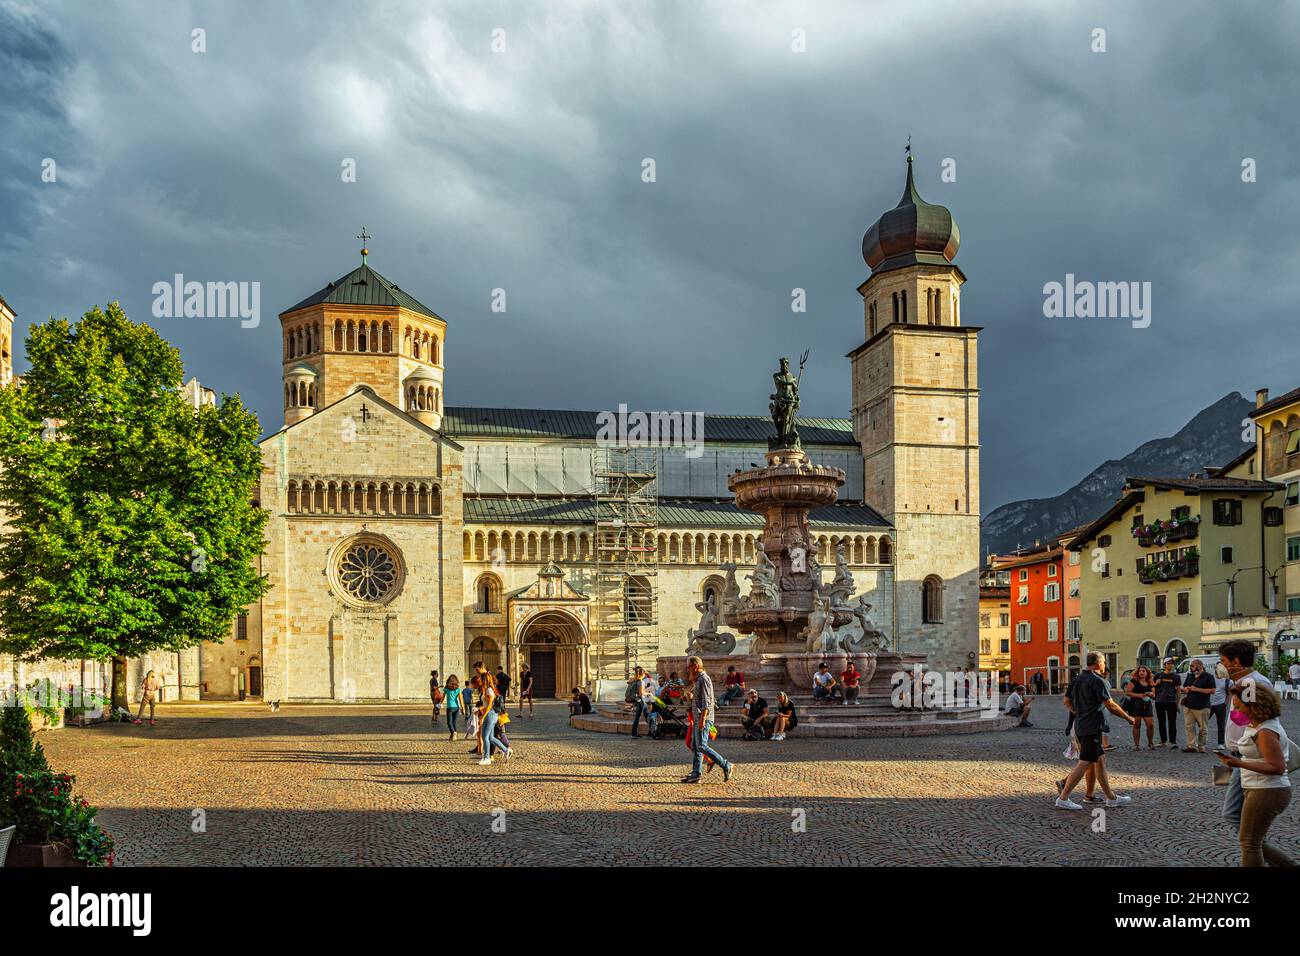 Piazza Duomo con la Catedral de San Vigilio y la fuente de Neptuno. Trento, provincia autónoma de Trento, Trentino-Alto Adige, Italia, Europa Foto de stock